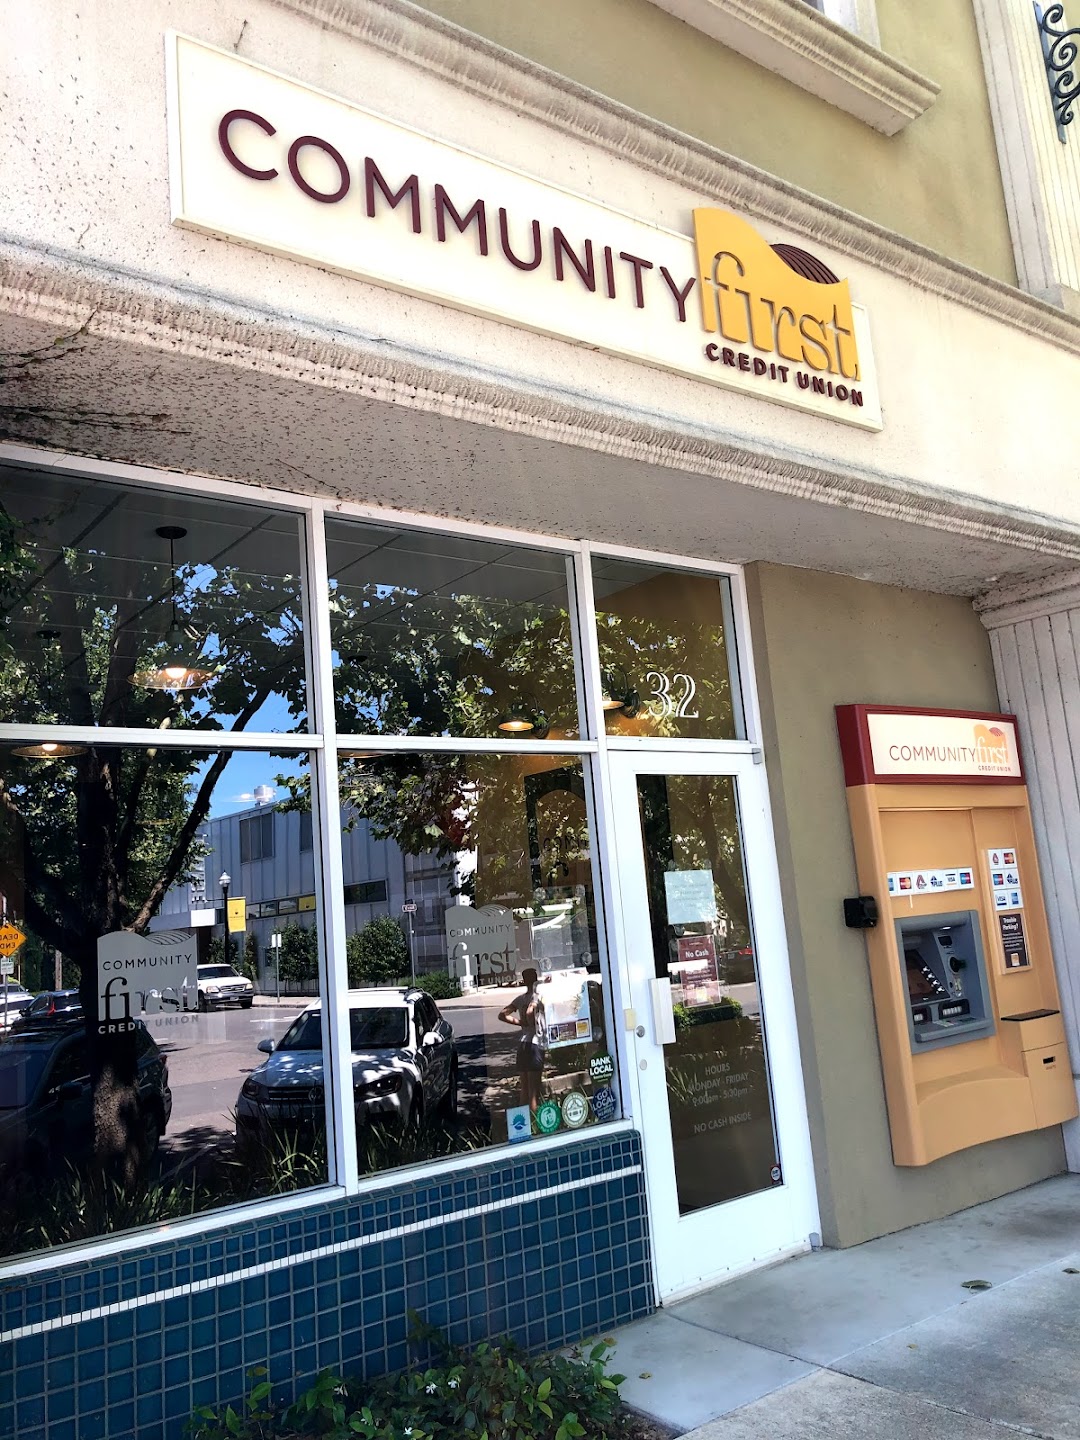 Community First Credit Union